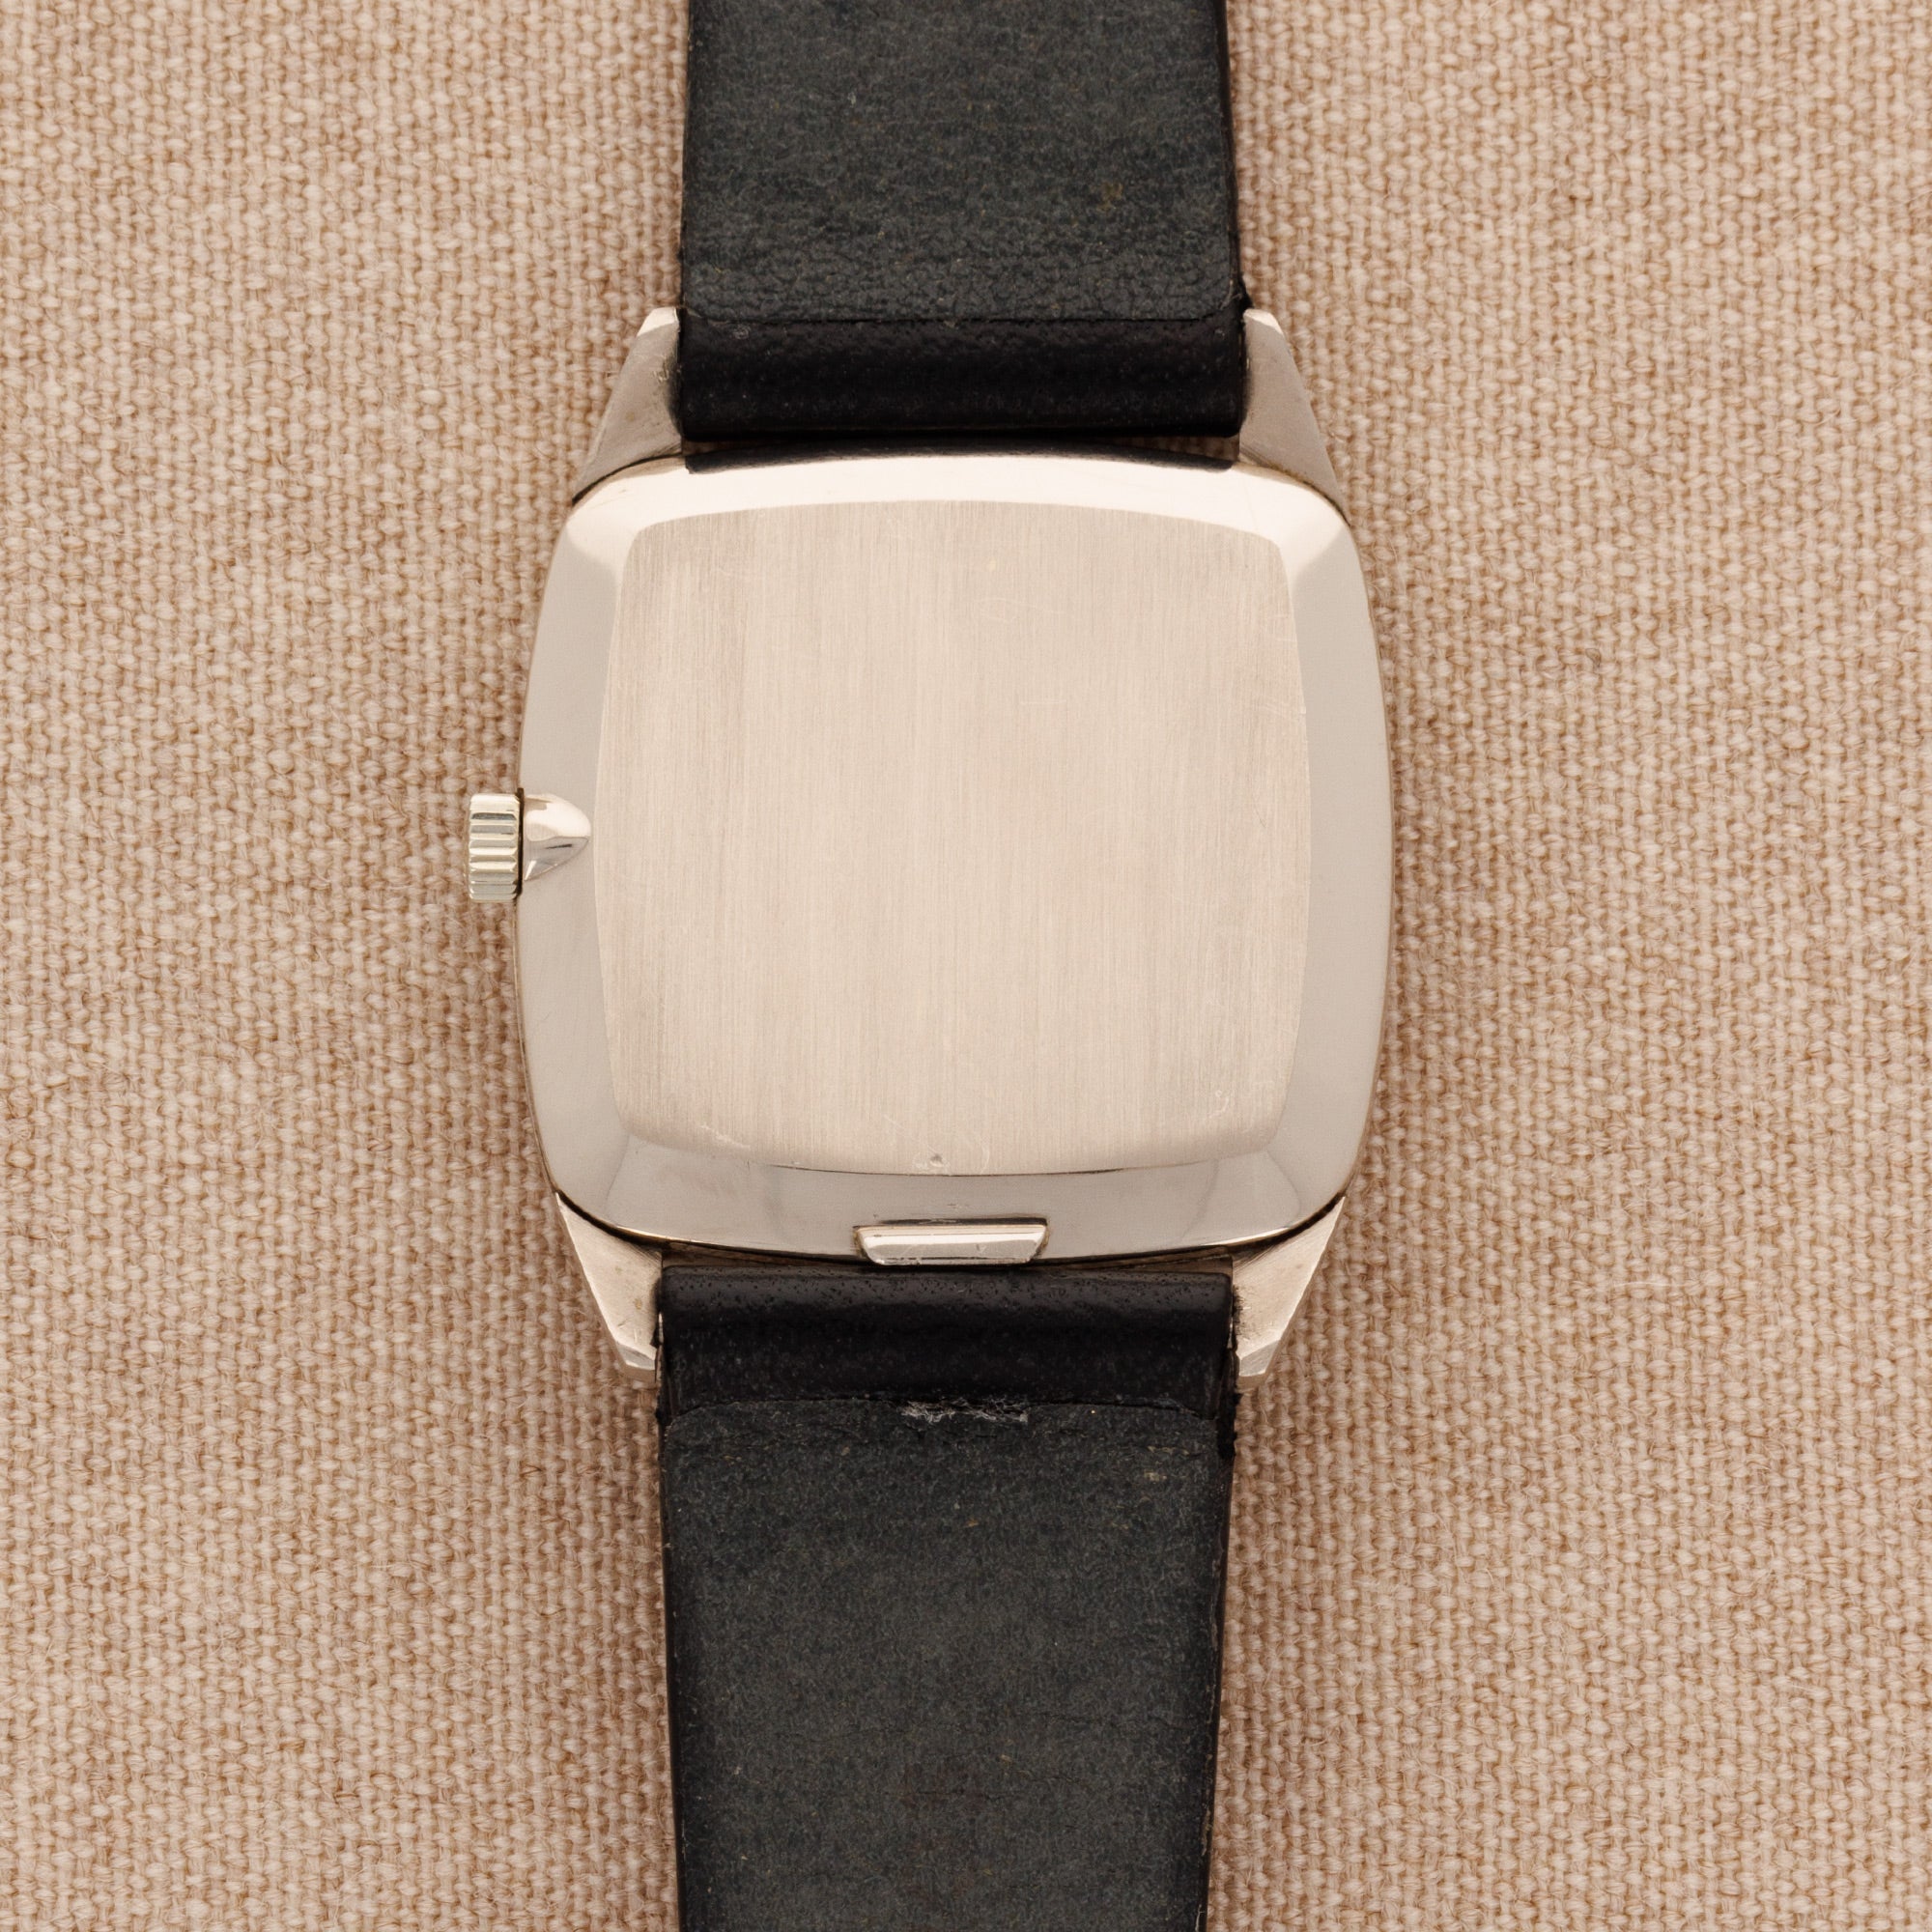 Patek Philippe - Patek Philippe White Gold Mechanical Watch Ref. 3566 - The Keystone Watches